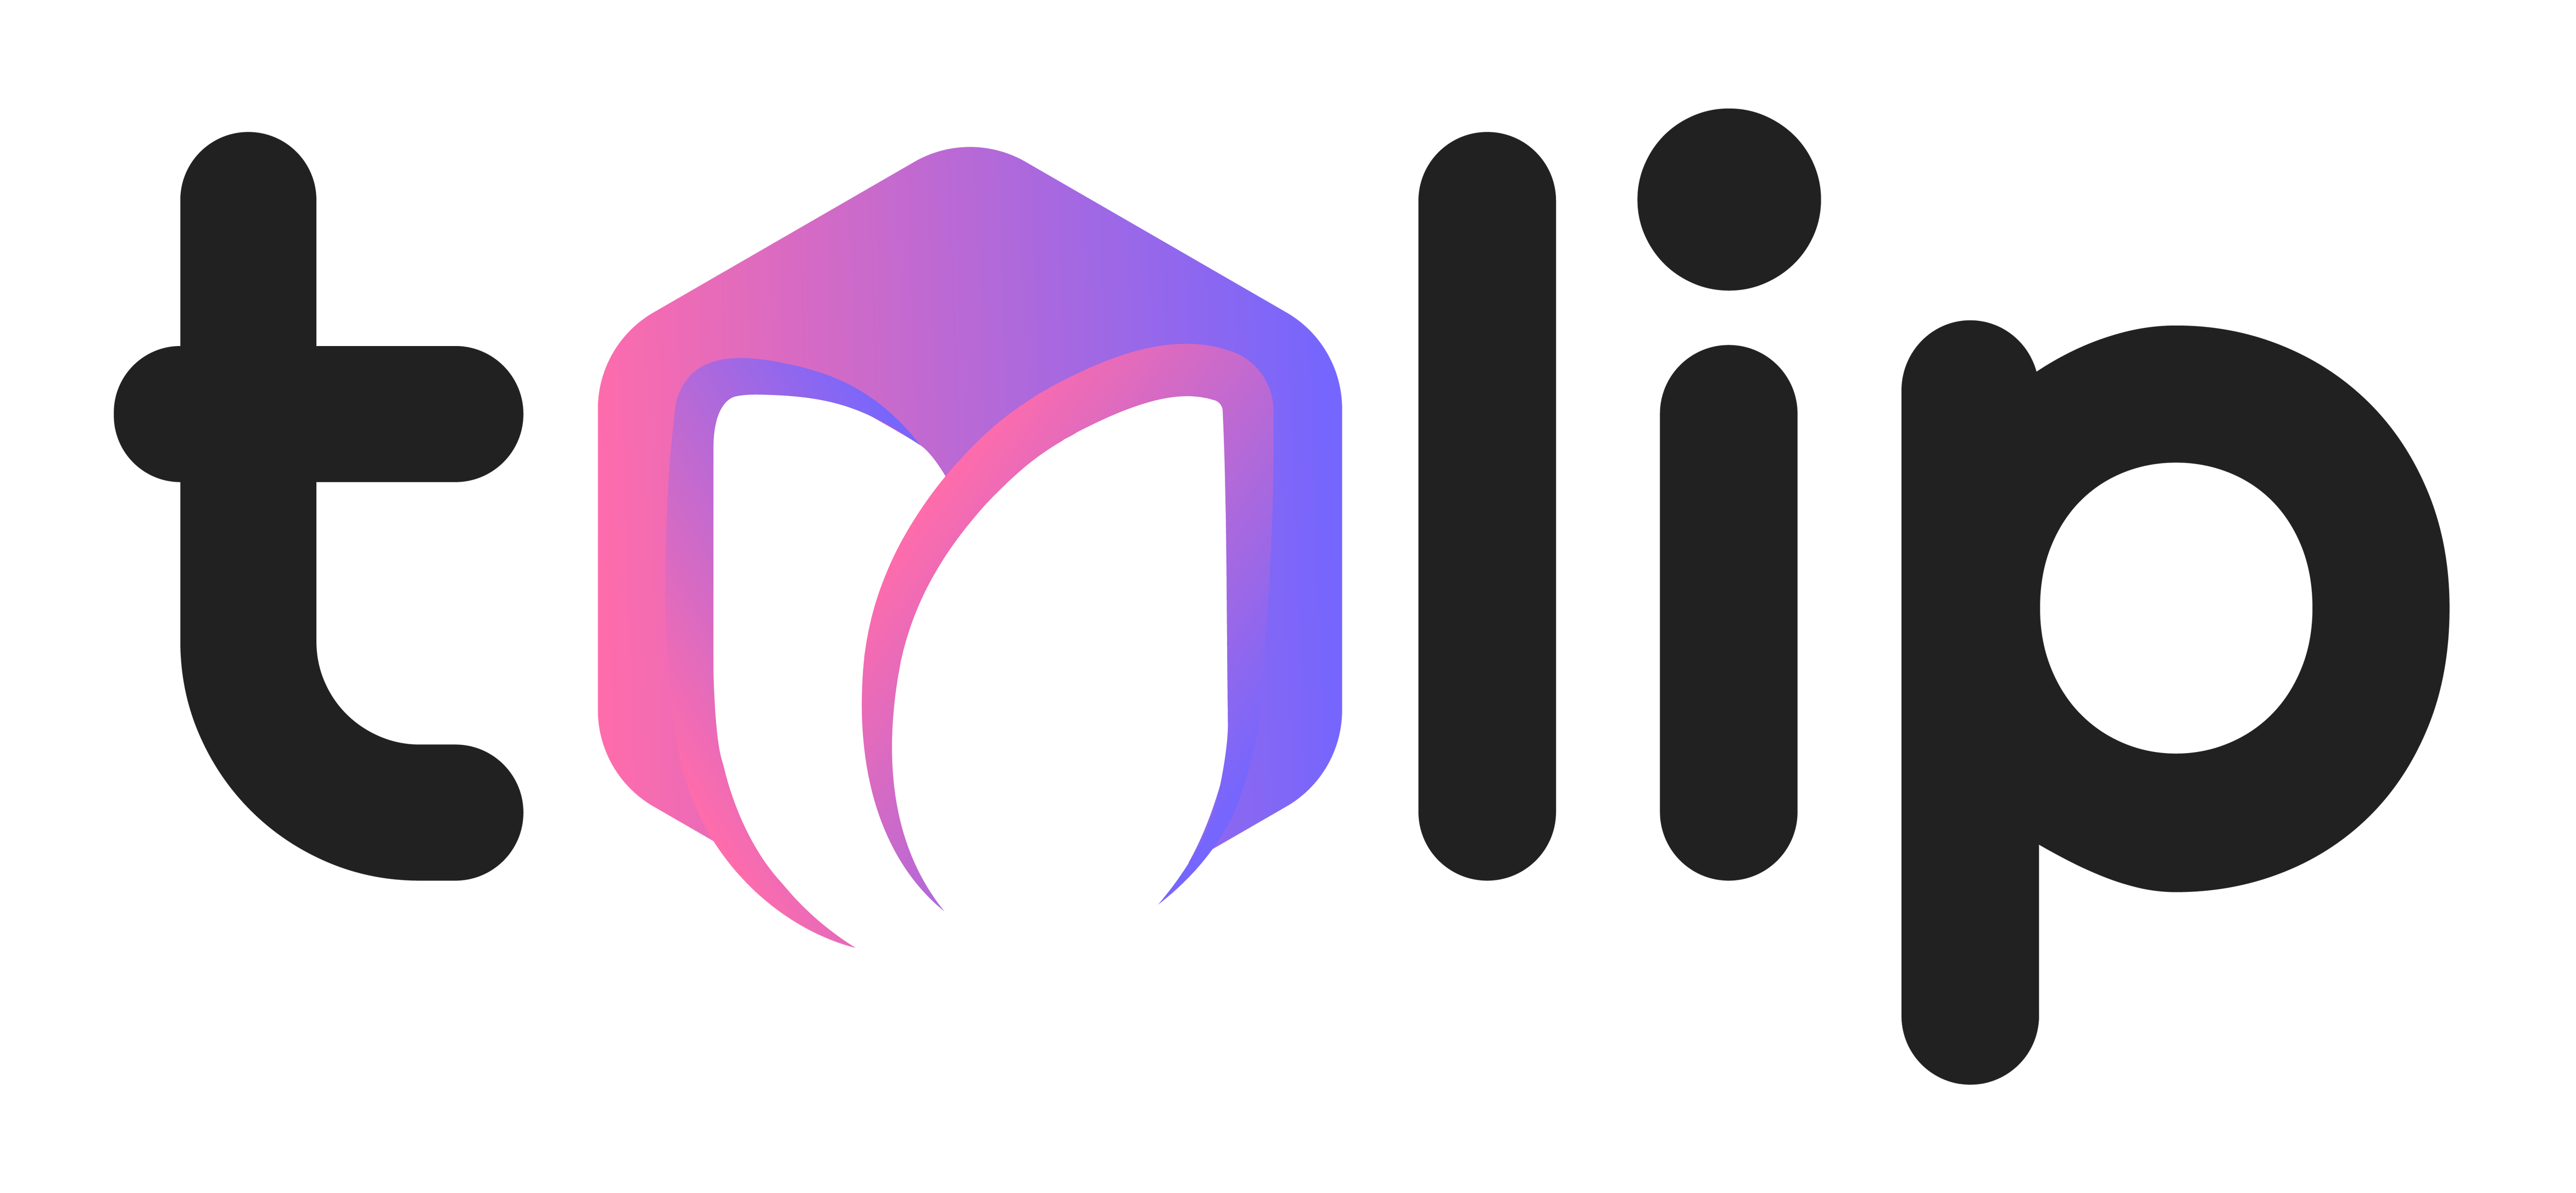 Hyperautomation Platform, Tulip logo